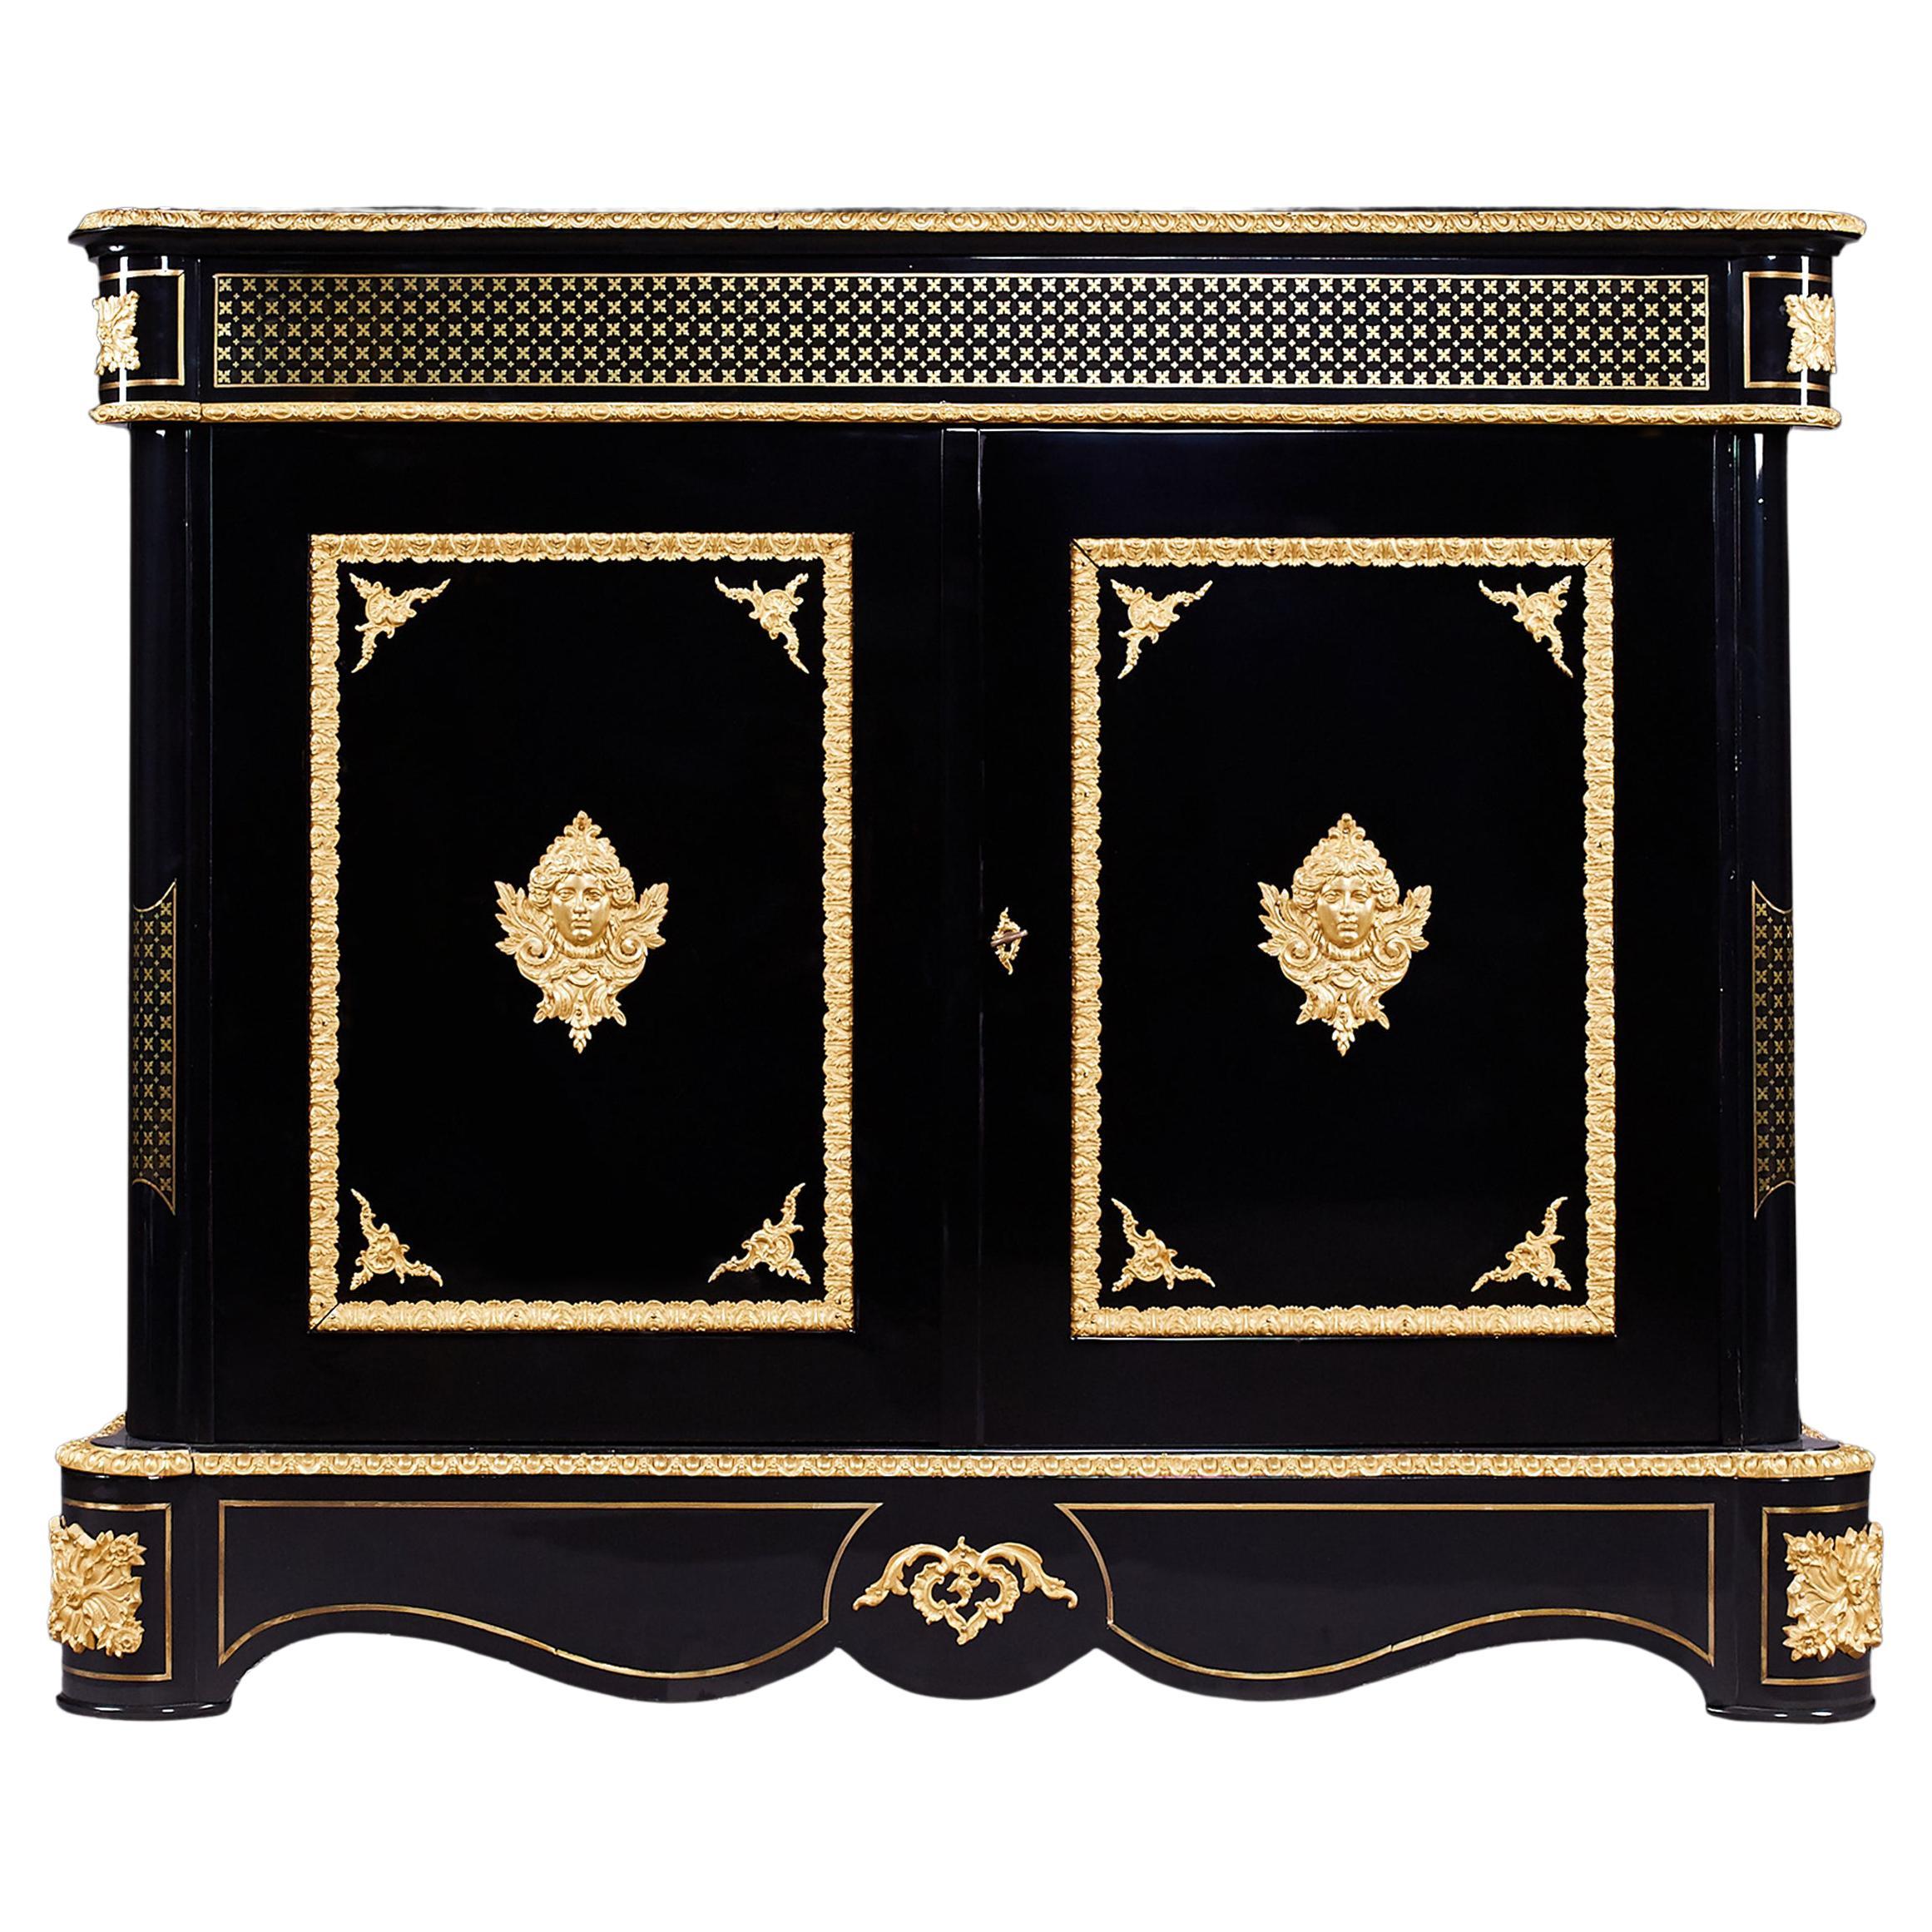 French 19th Century Napoleon III Period Cabinet